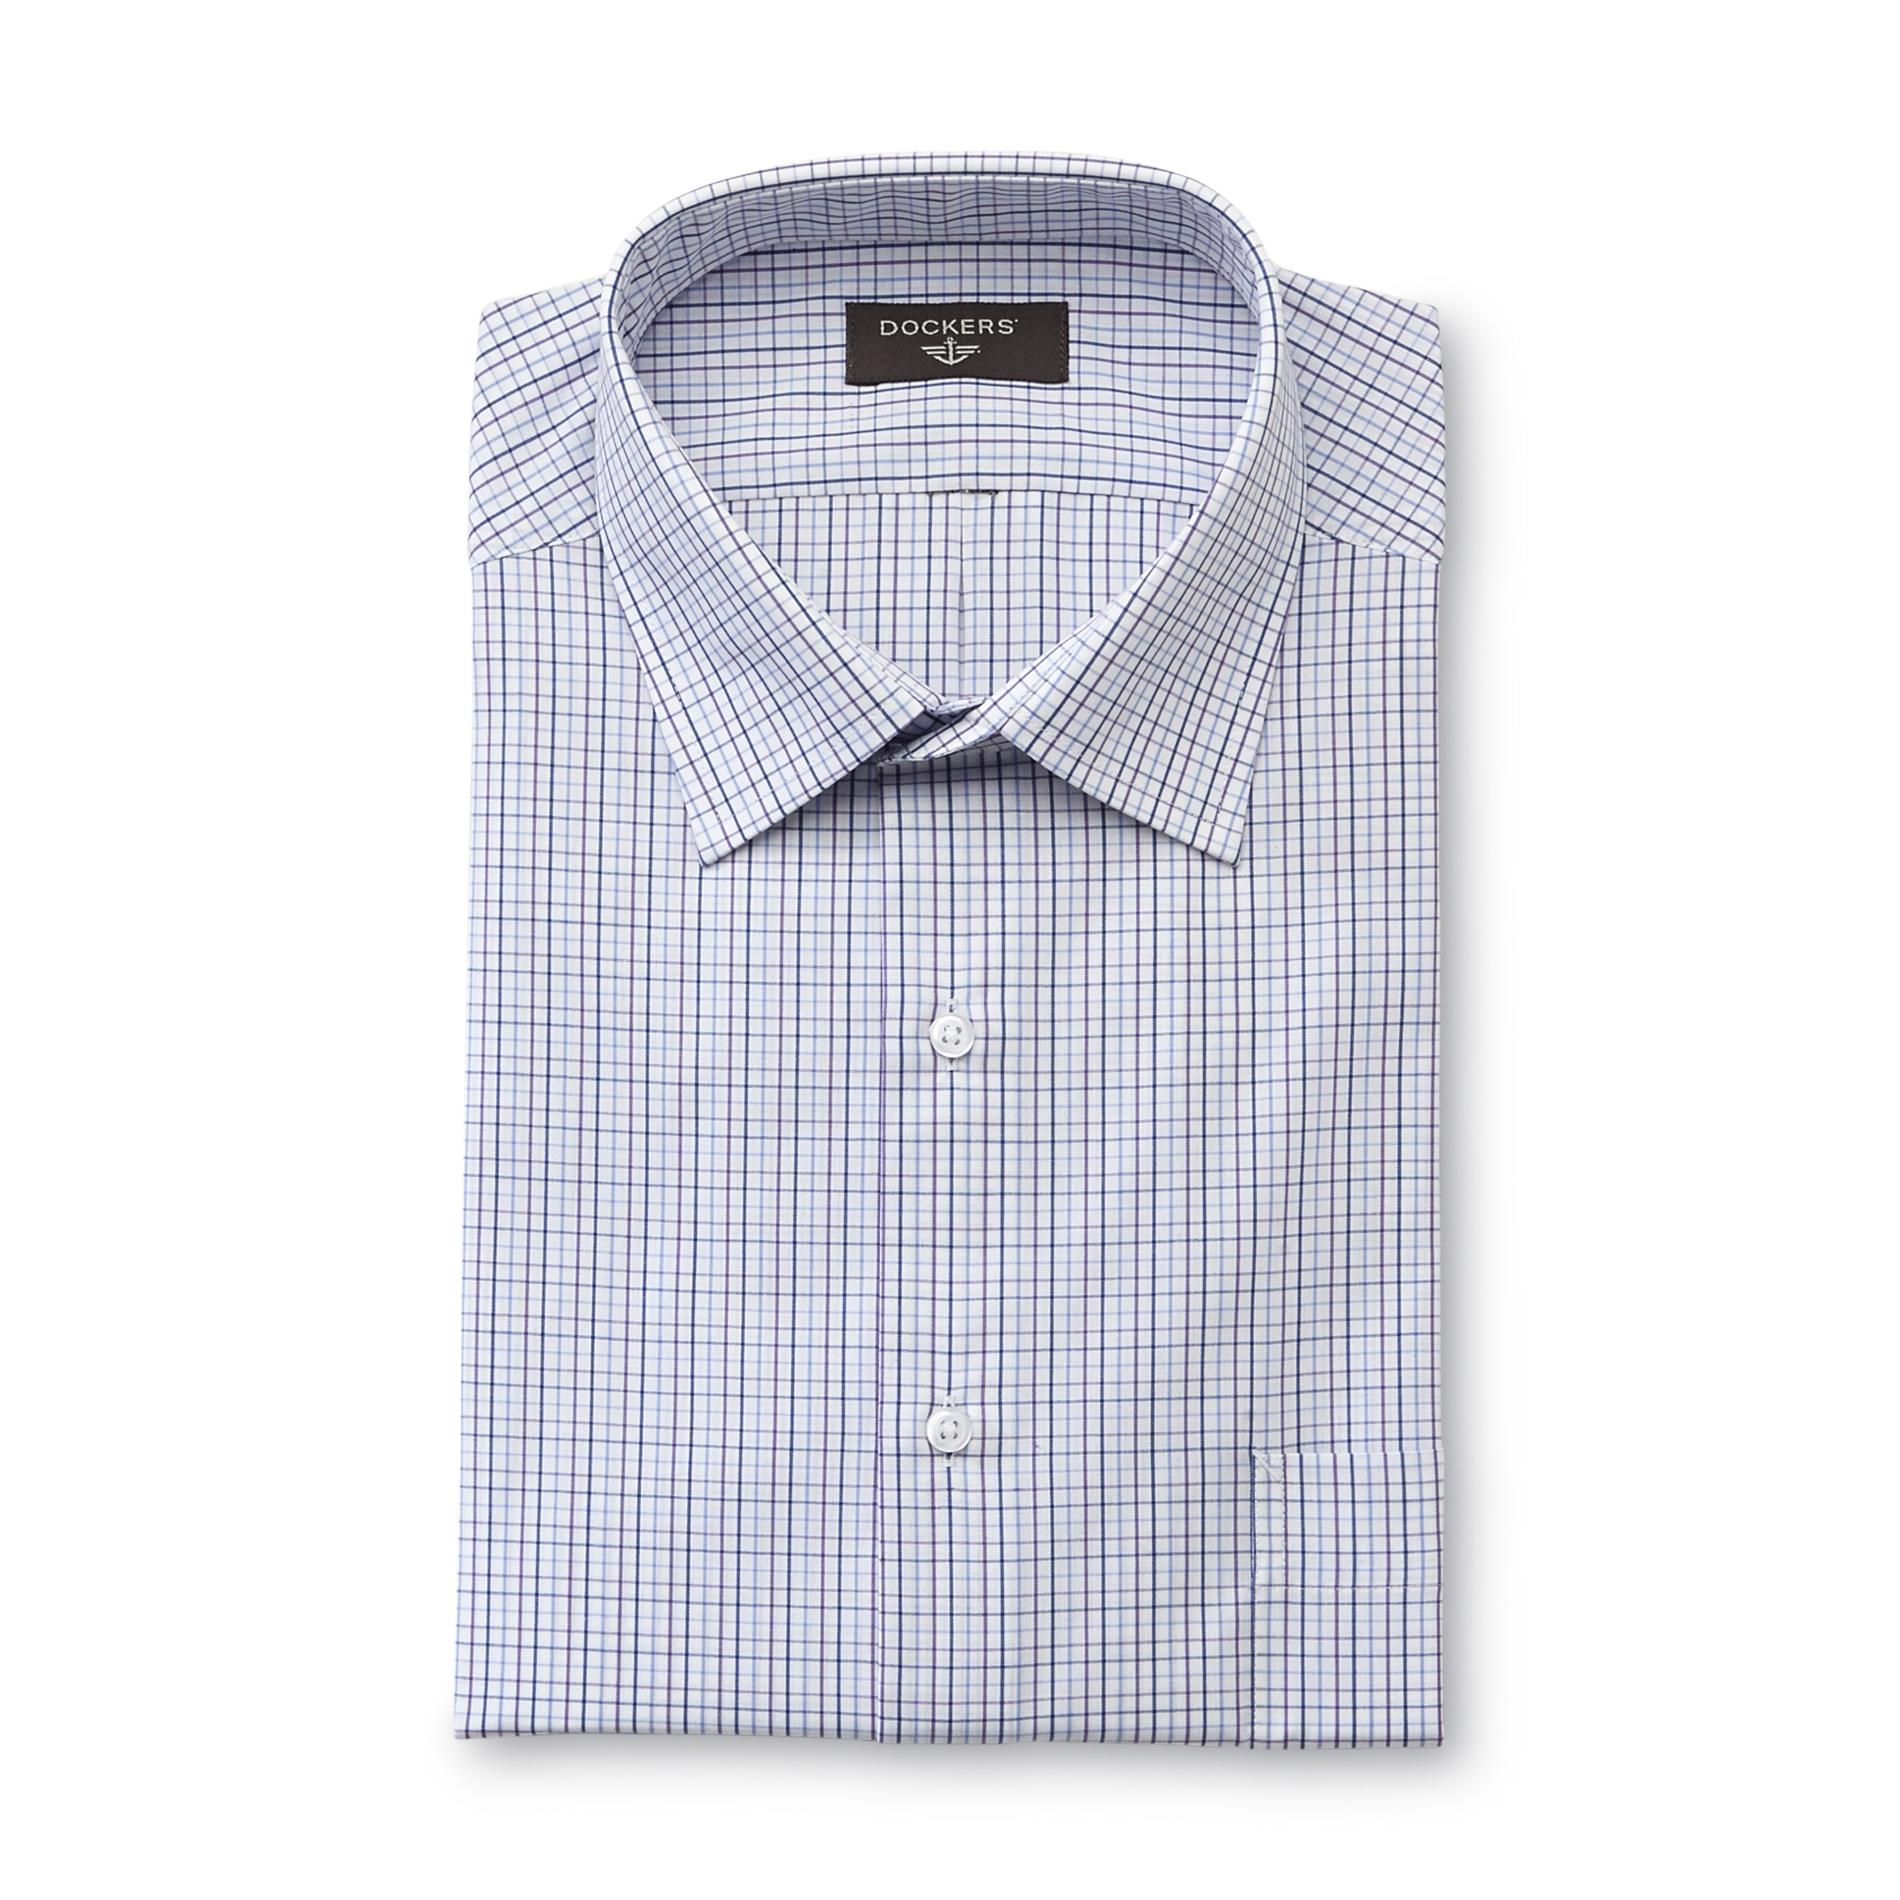 Dockers Men's Classic Fit Dress Shirt - Checkered